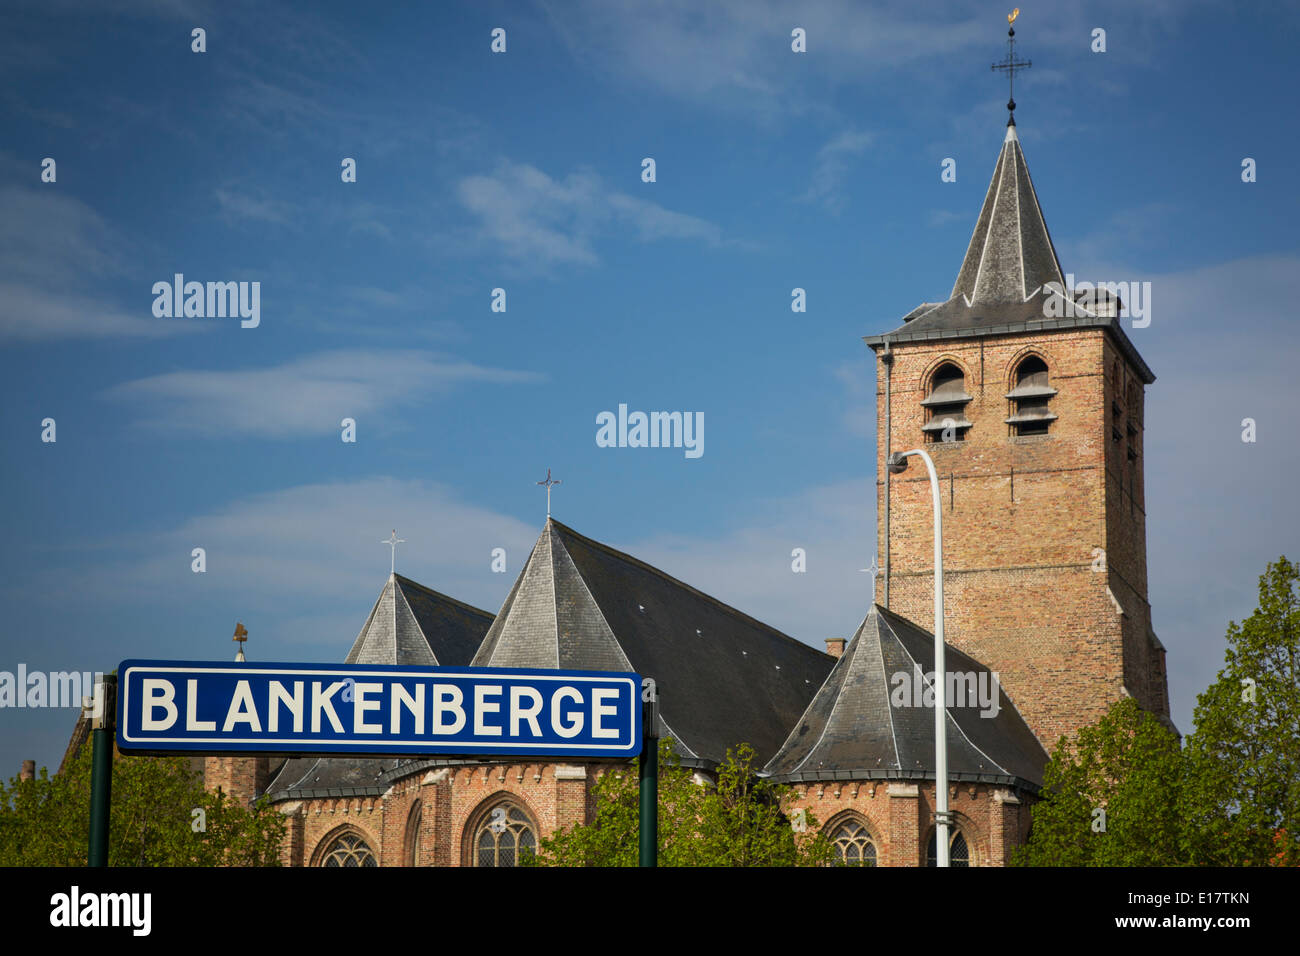 Sint Antonius Church rises above the train terminal sign, Blankenberge, Belgium Stock Photo